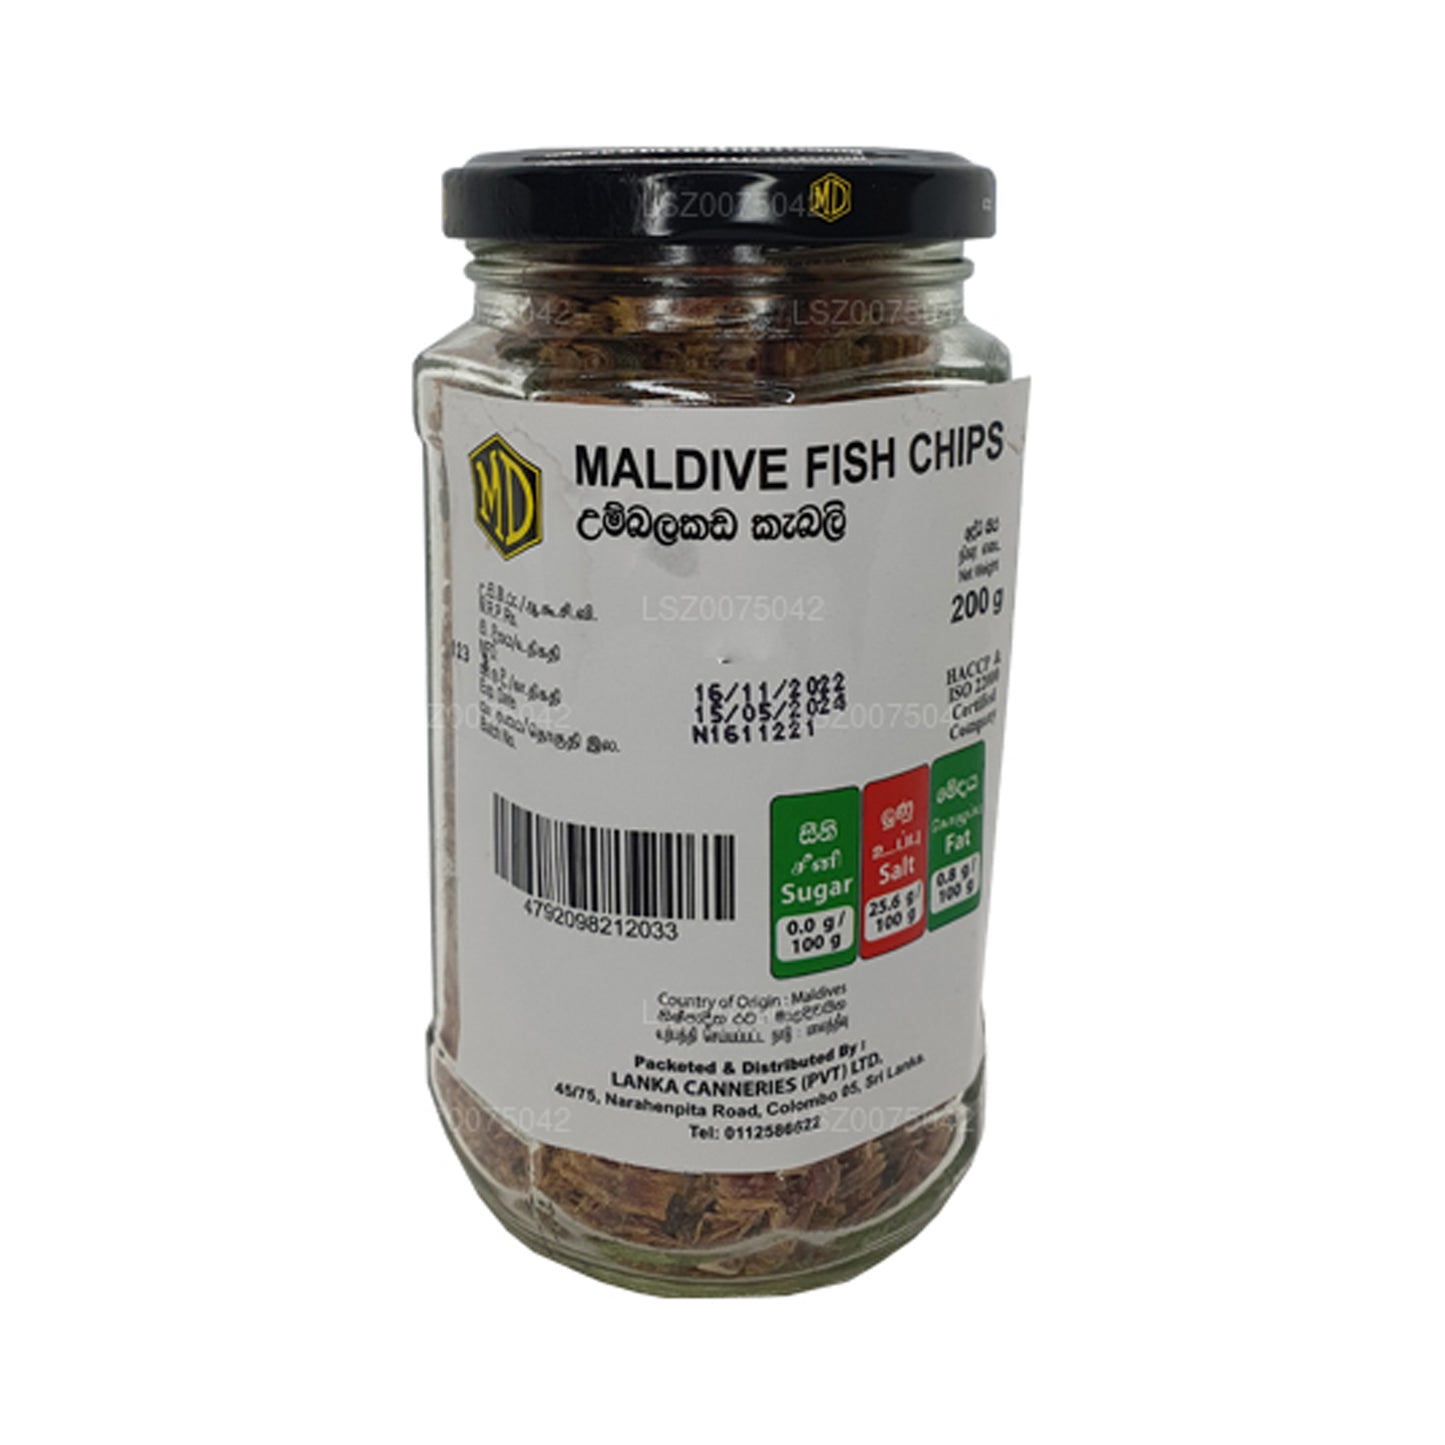 Бутылка с рыбными чипсами MD Maldive (200 г)